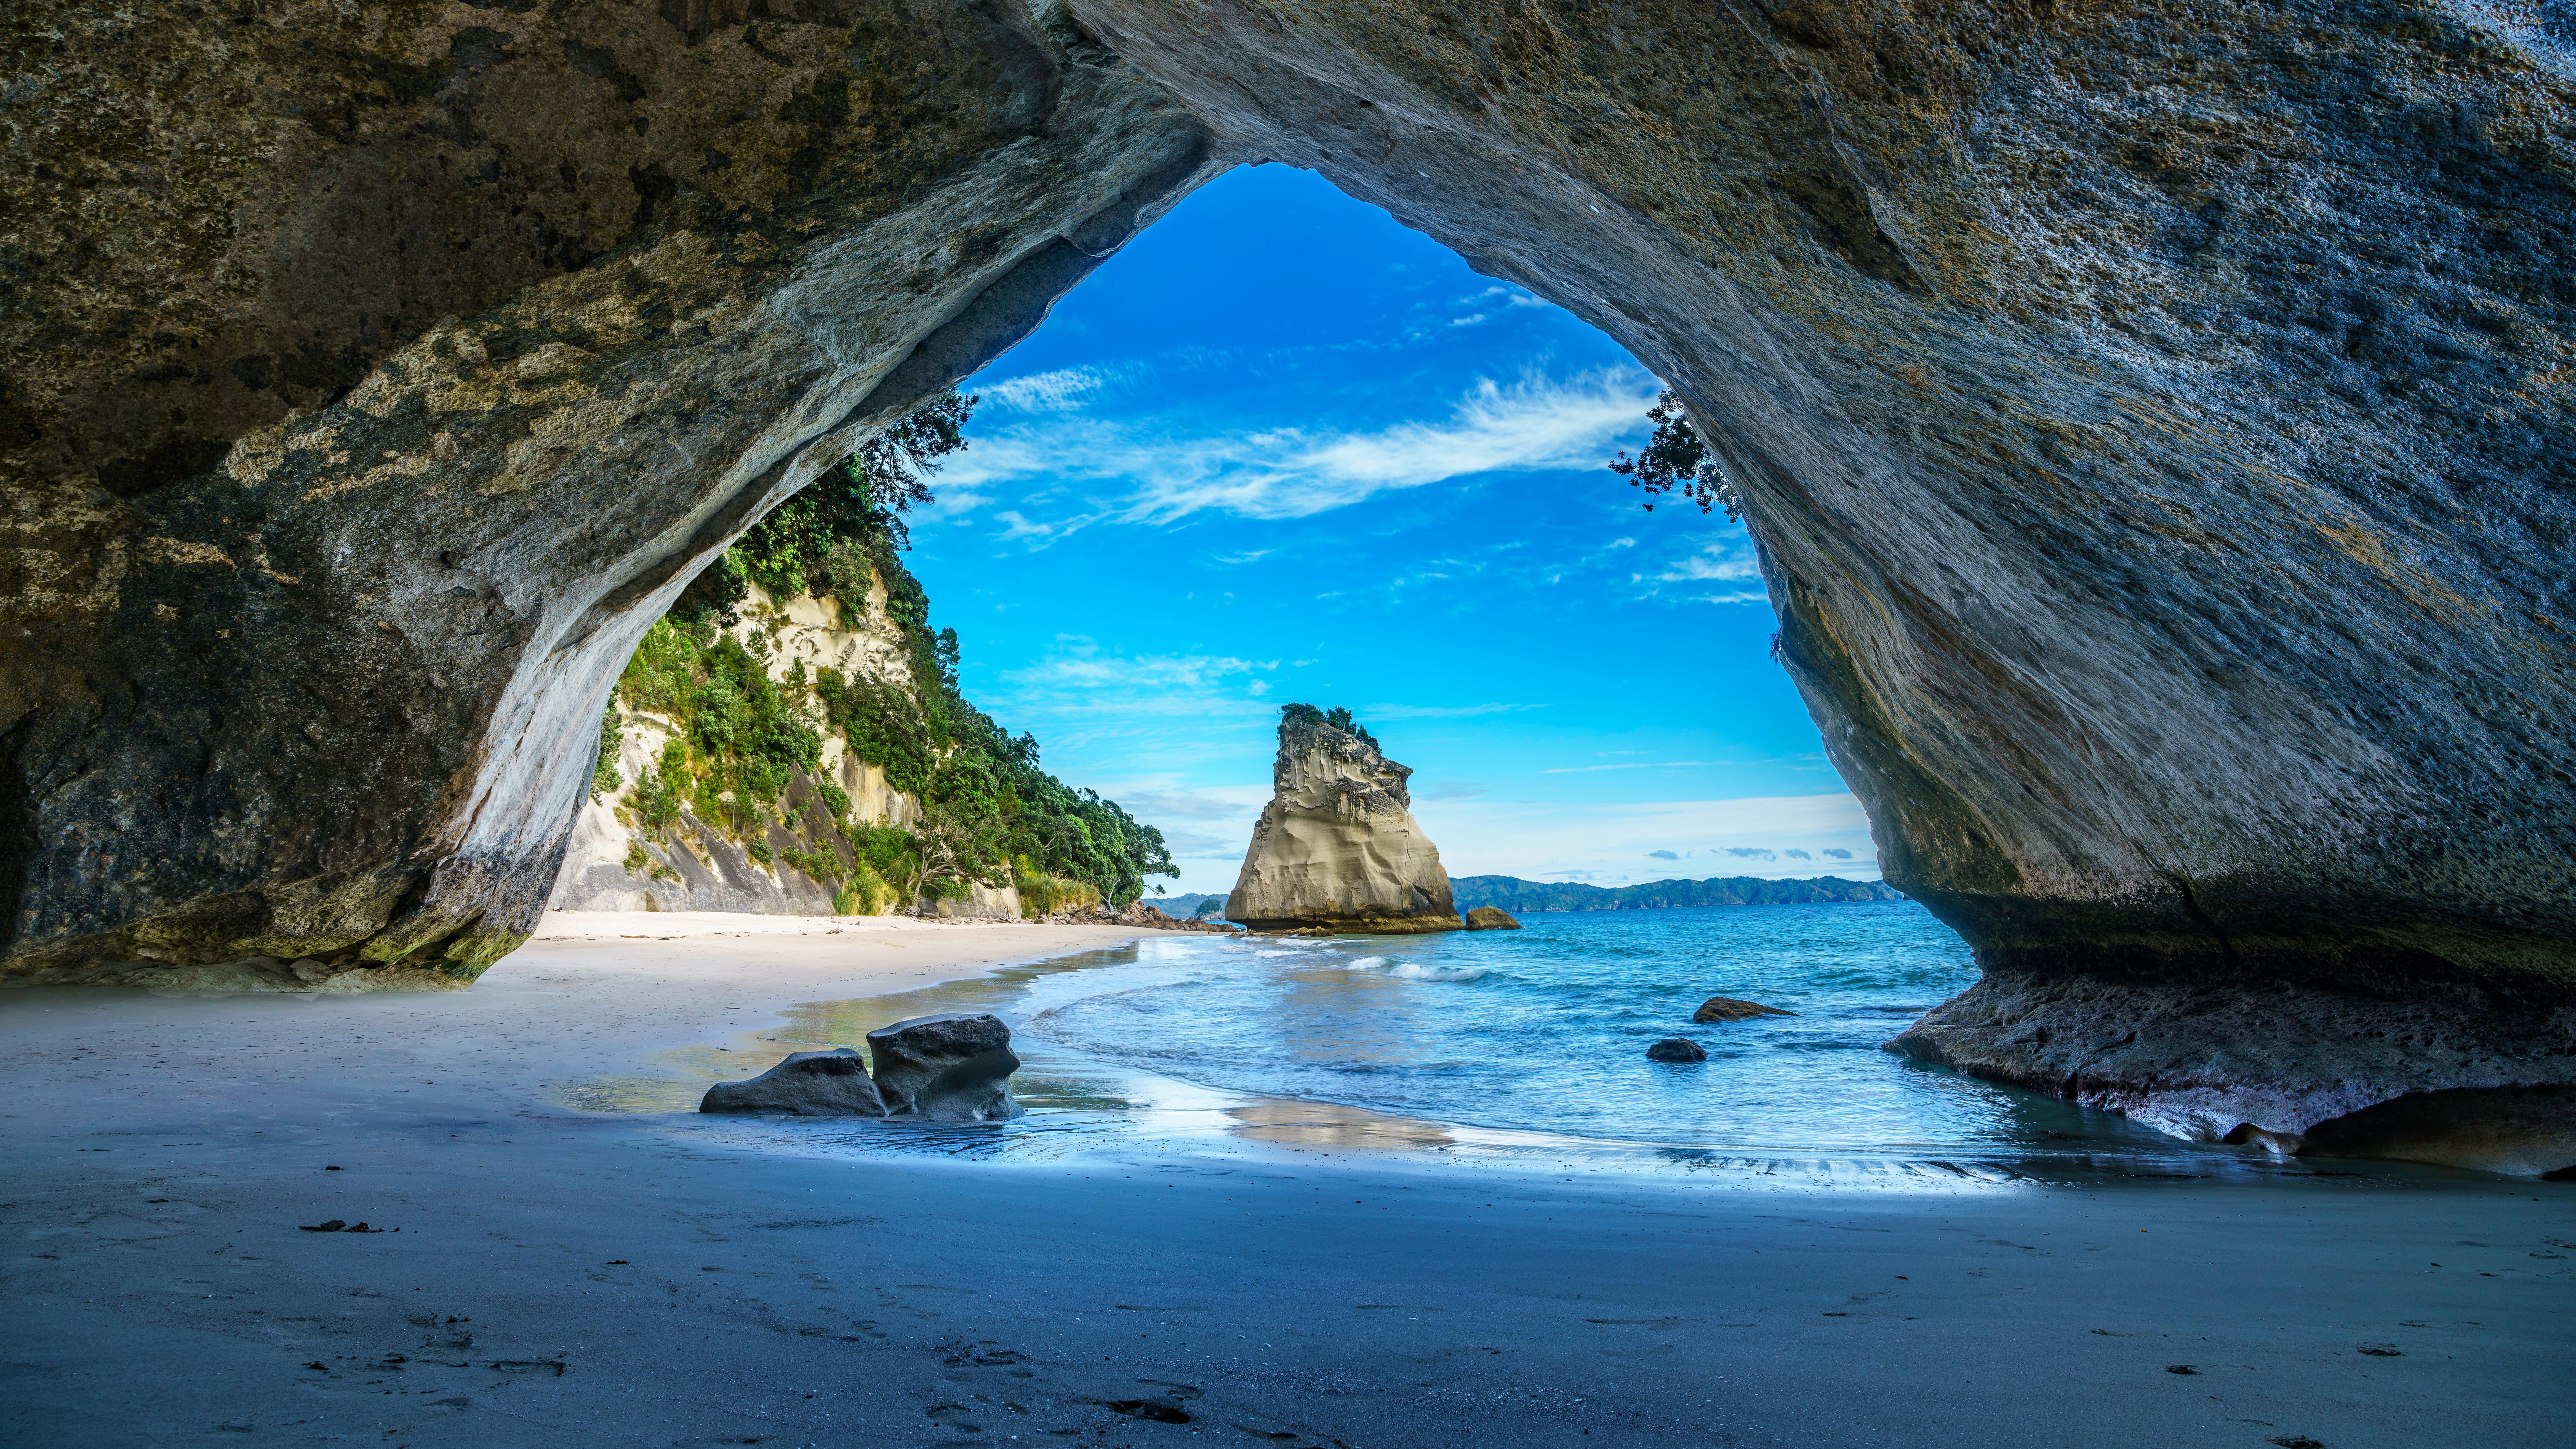 Plan a seaside trip at the best beaches in Coromandel Peninsula